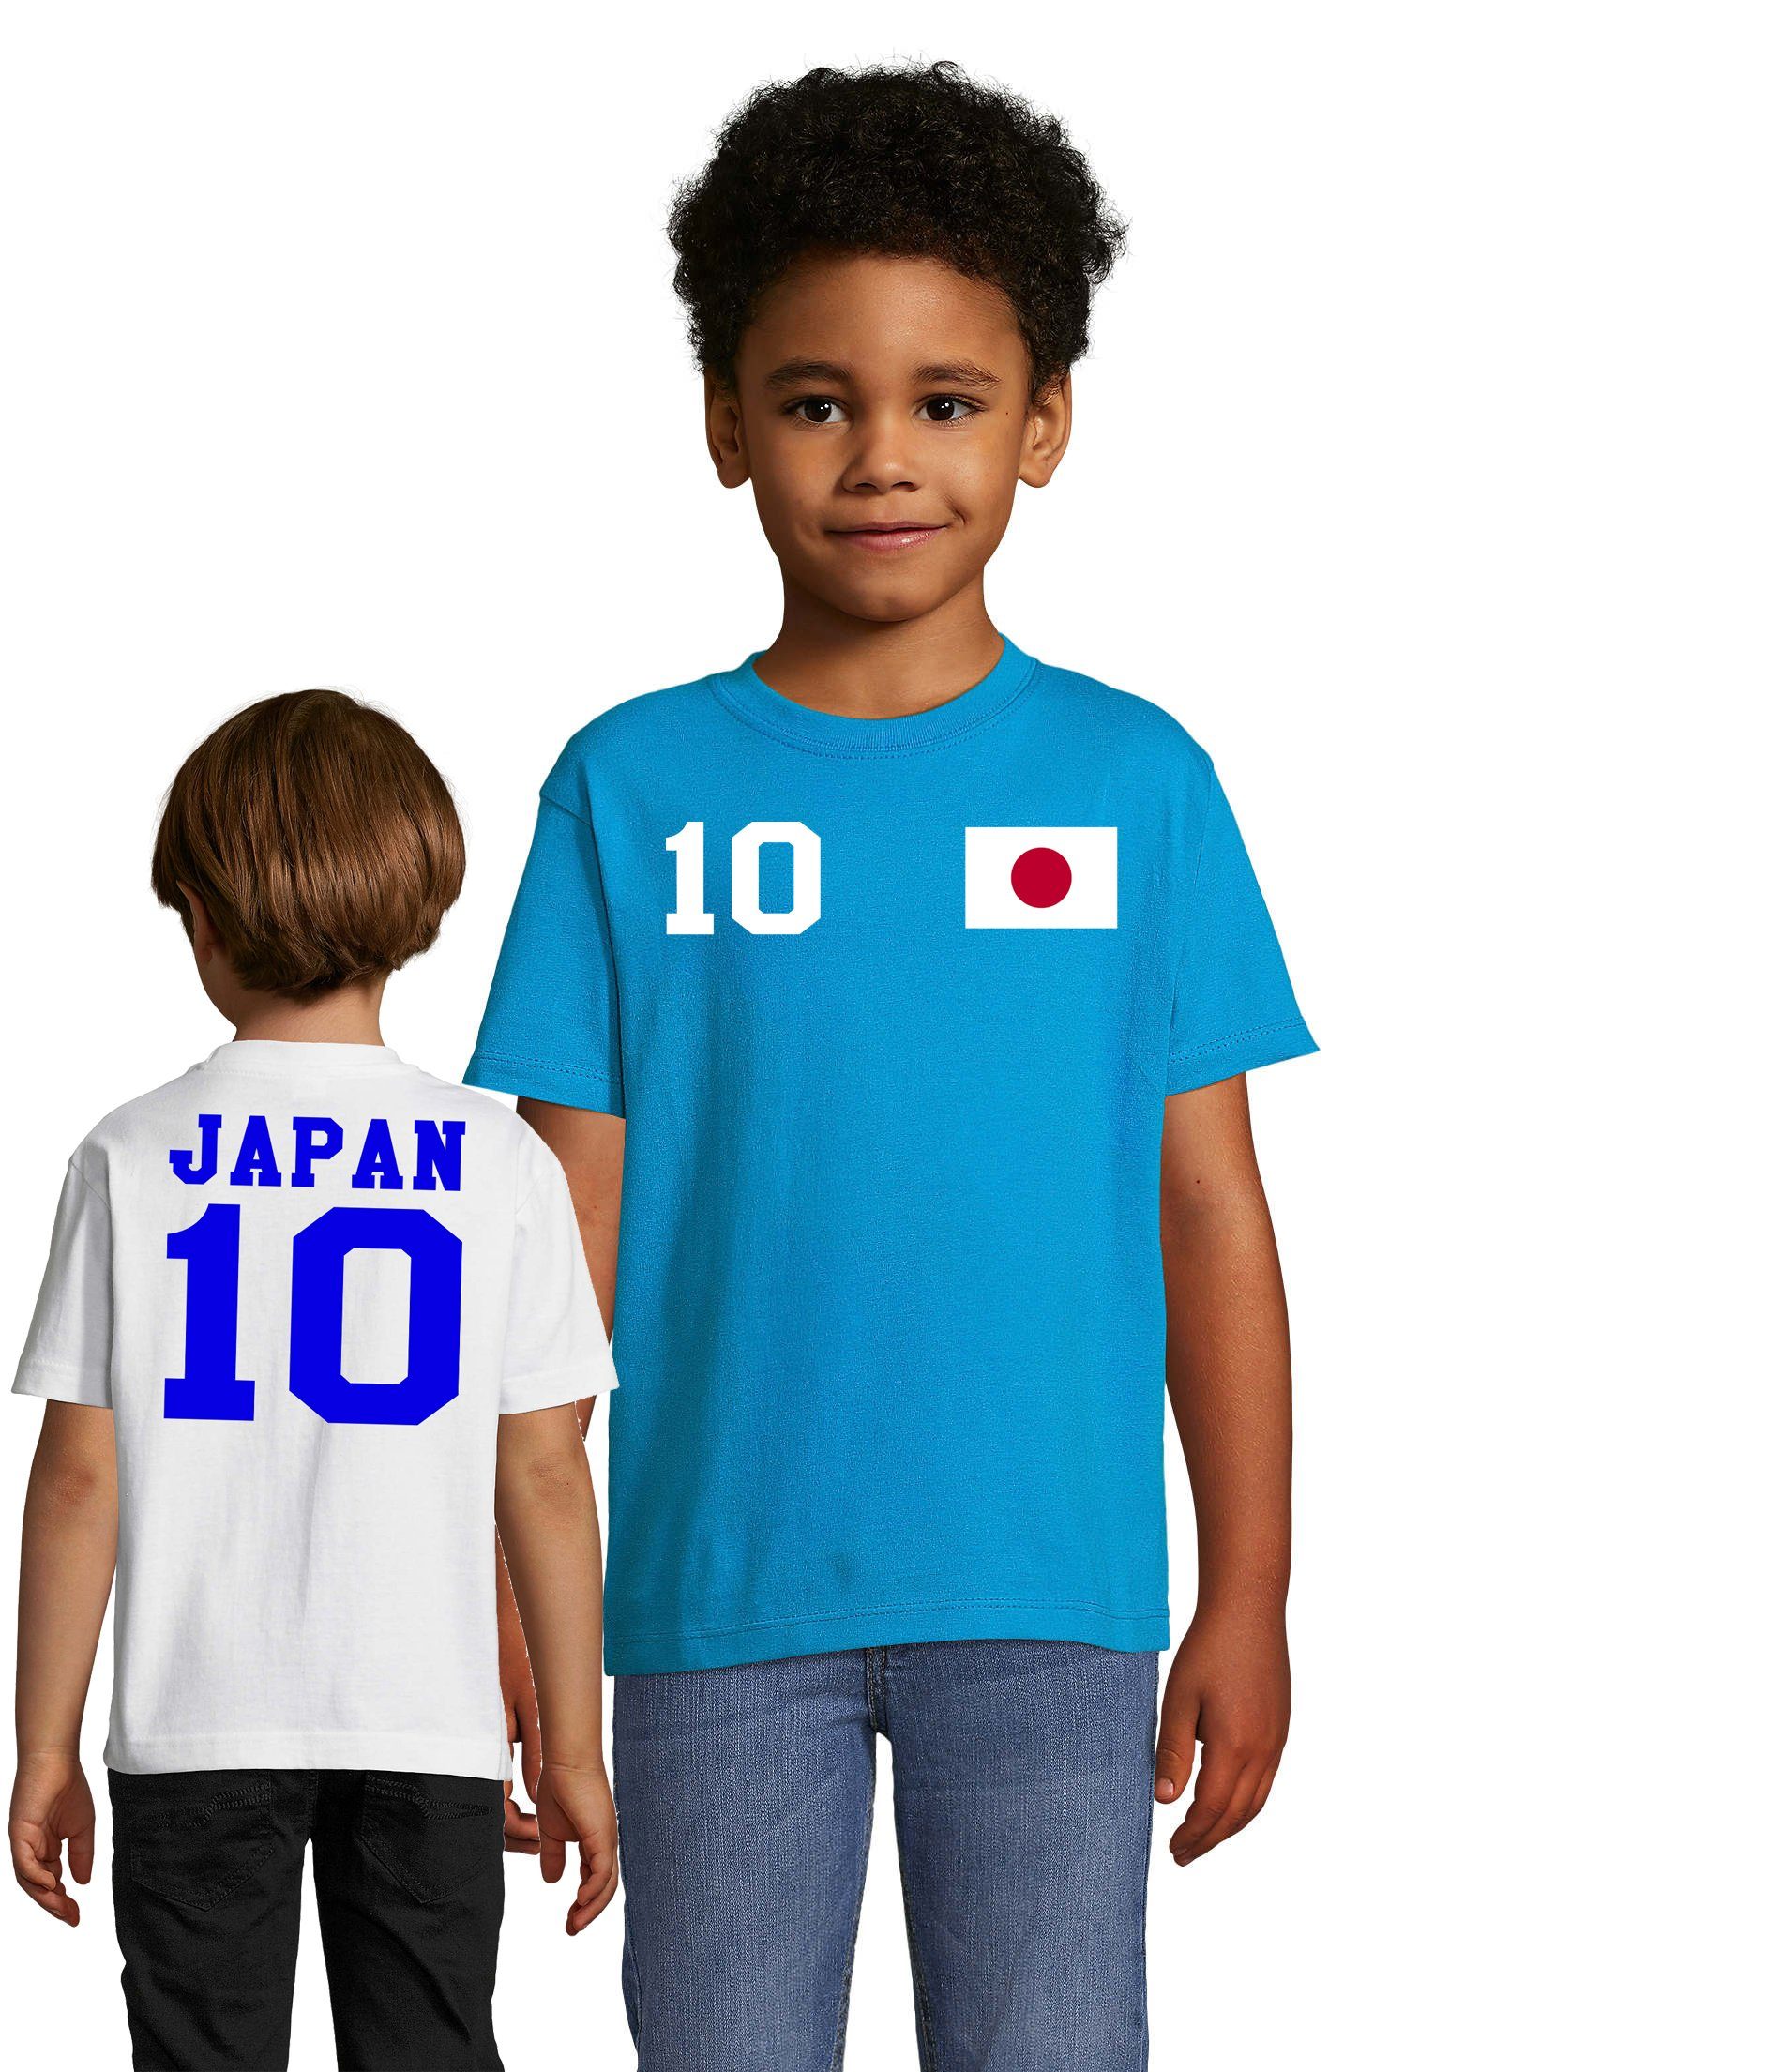 Blondie & Handball Japan Kinder Trikot T-Shirt Sport WM Weiss/Blau Meister Brownie Fußball Asien